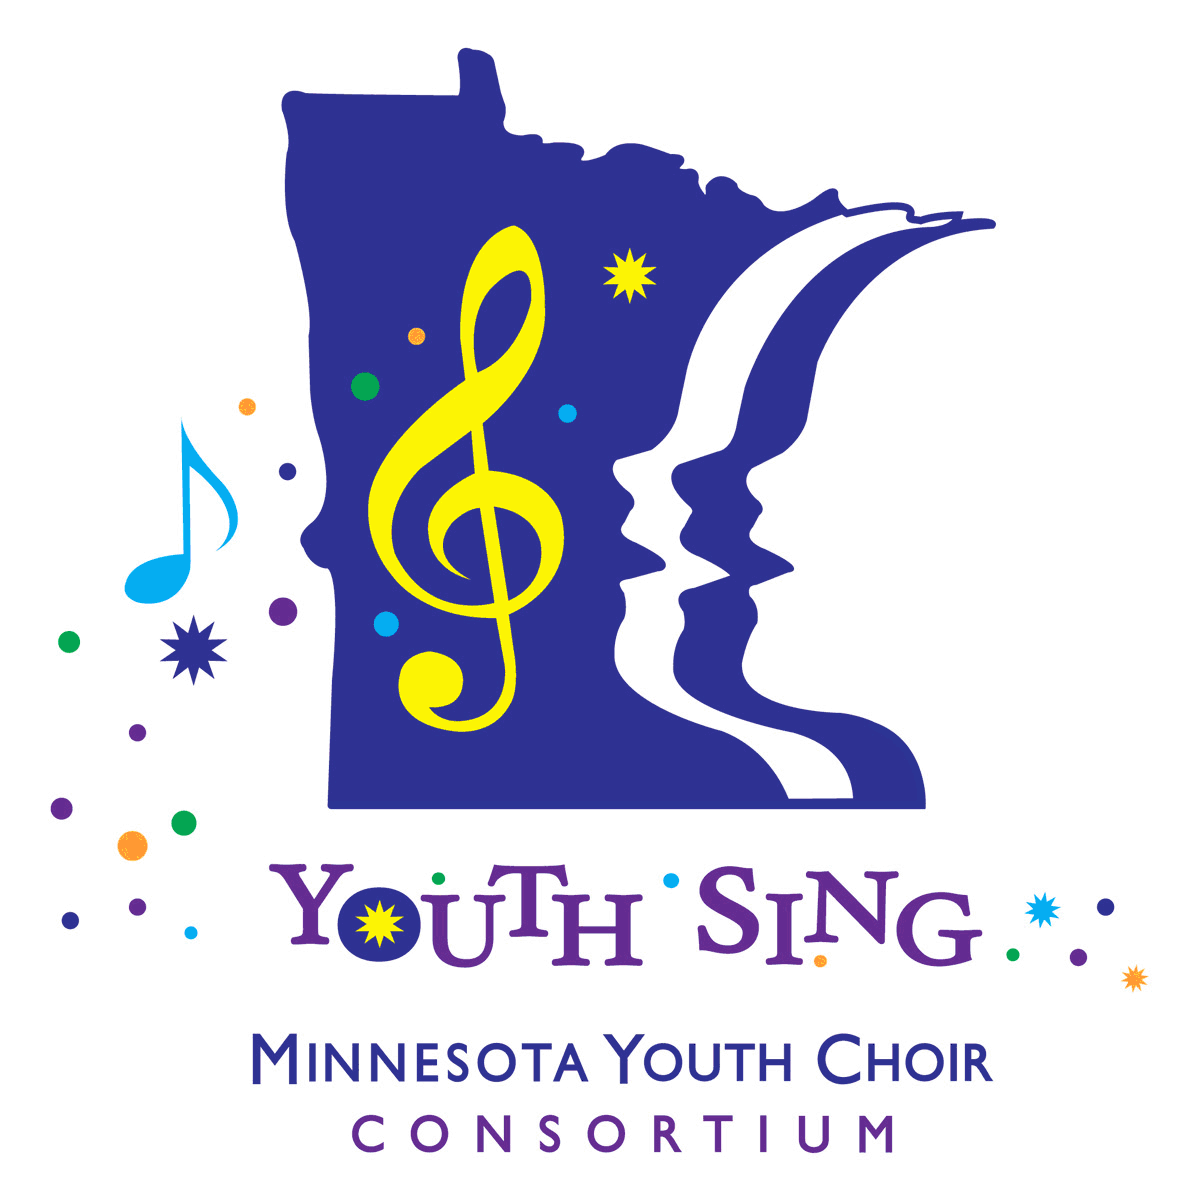 Youth Choir Singing Minnesota Chorale   Education   Minneapolis Yo